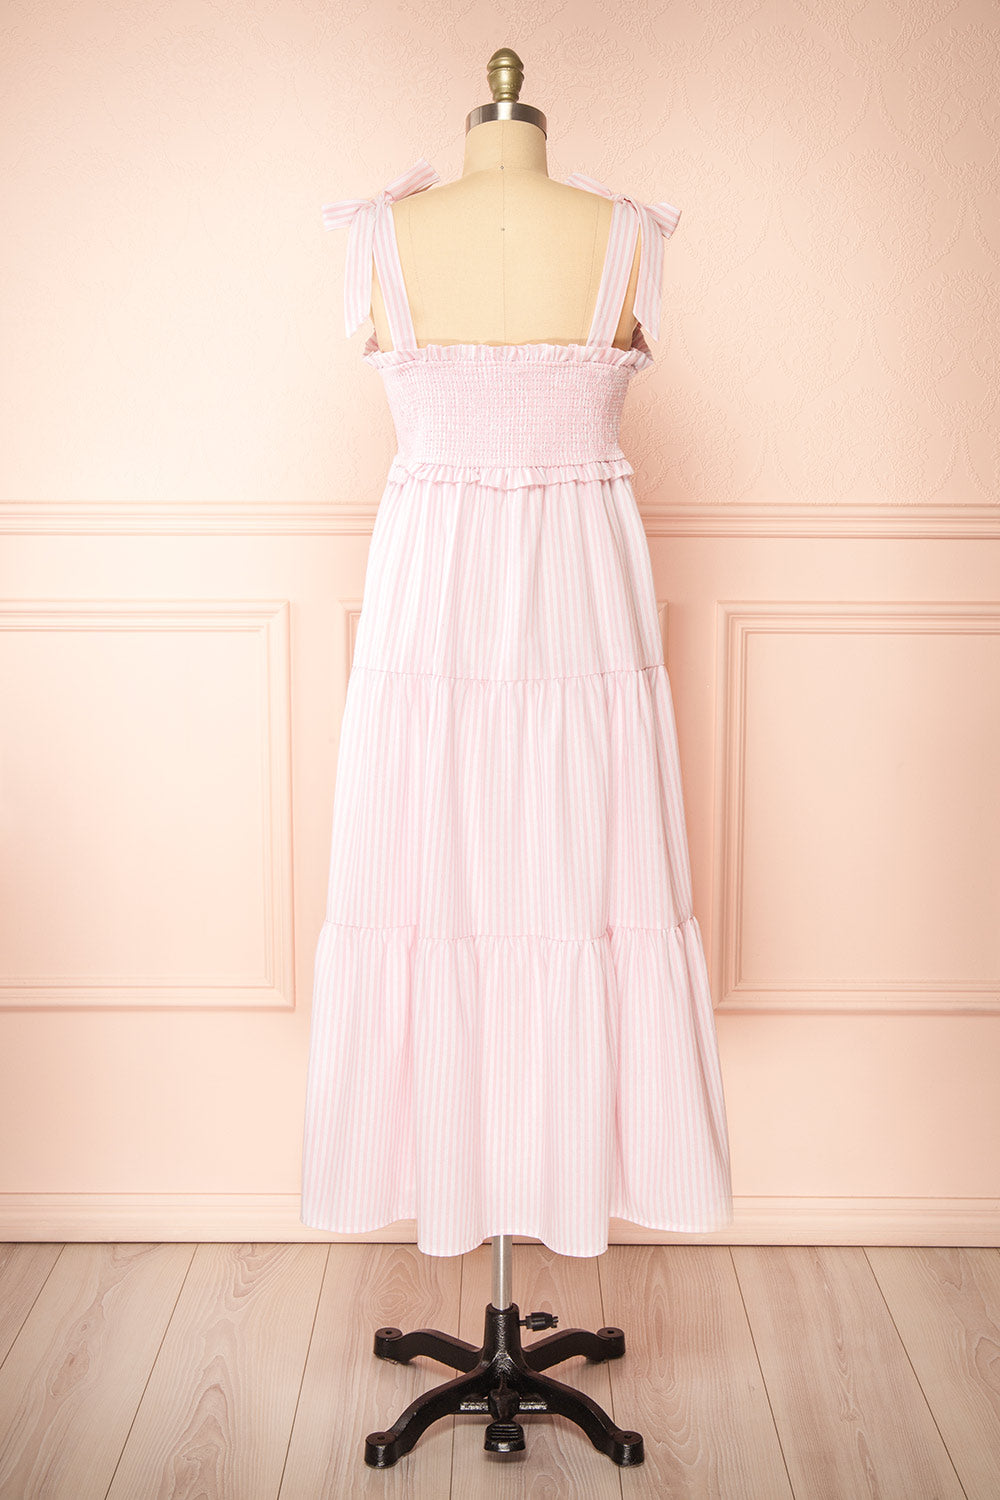 Addison Long Pink Striped Dress | Boutique 1861 back view